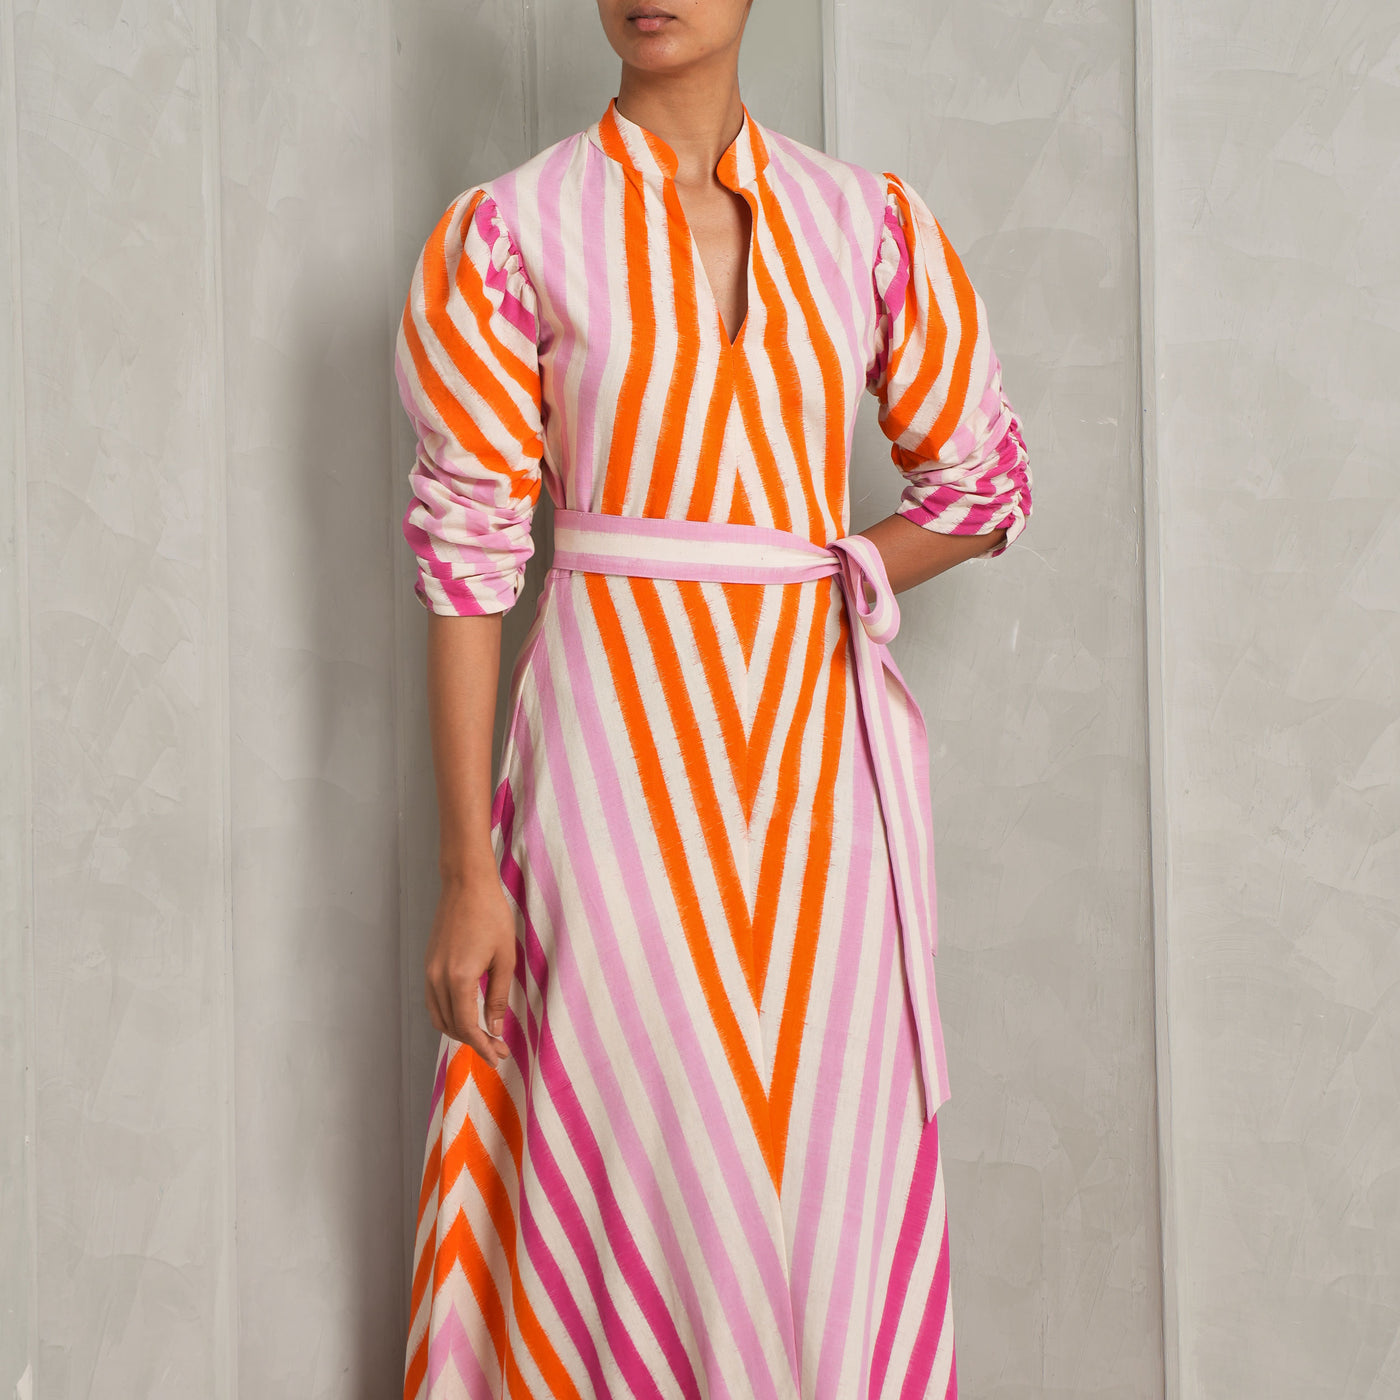 DE-CASTRO Illusion Maxi Dress Media pink orange white stripes long tie up long designer luxury